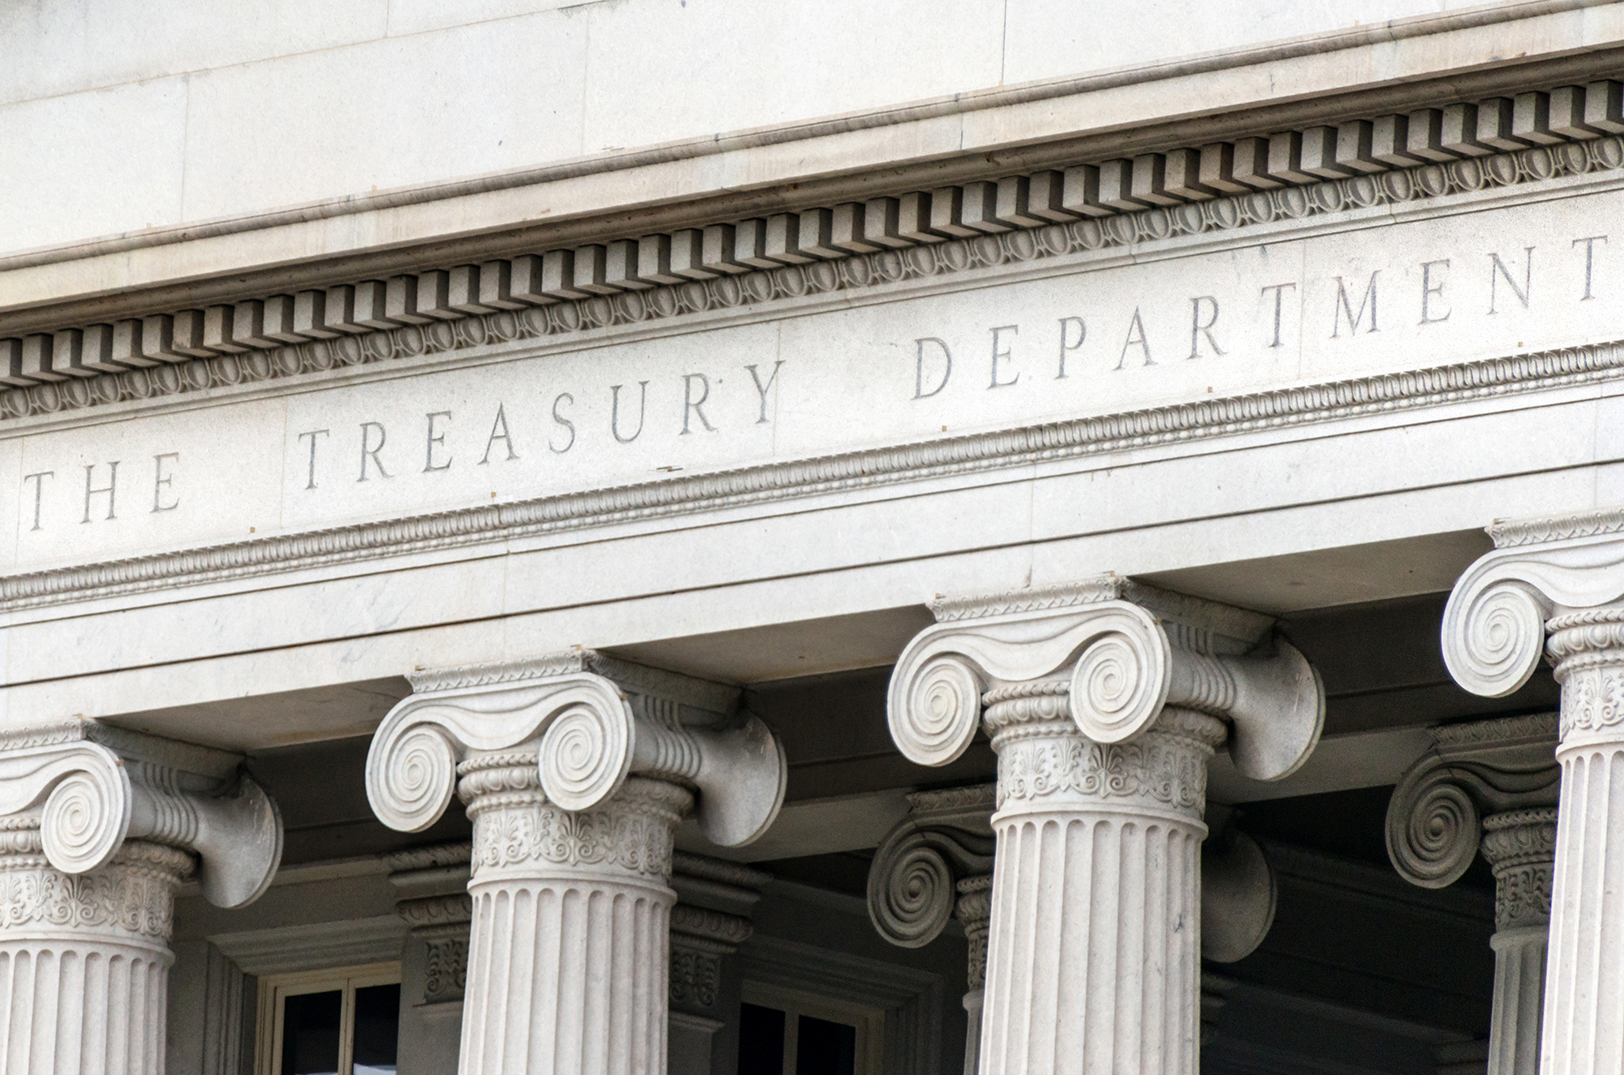 US treasury department sign in Washington DC facade